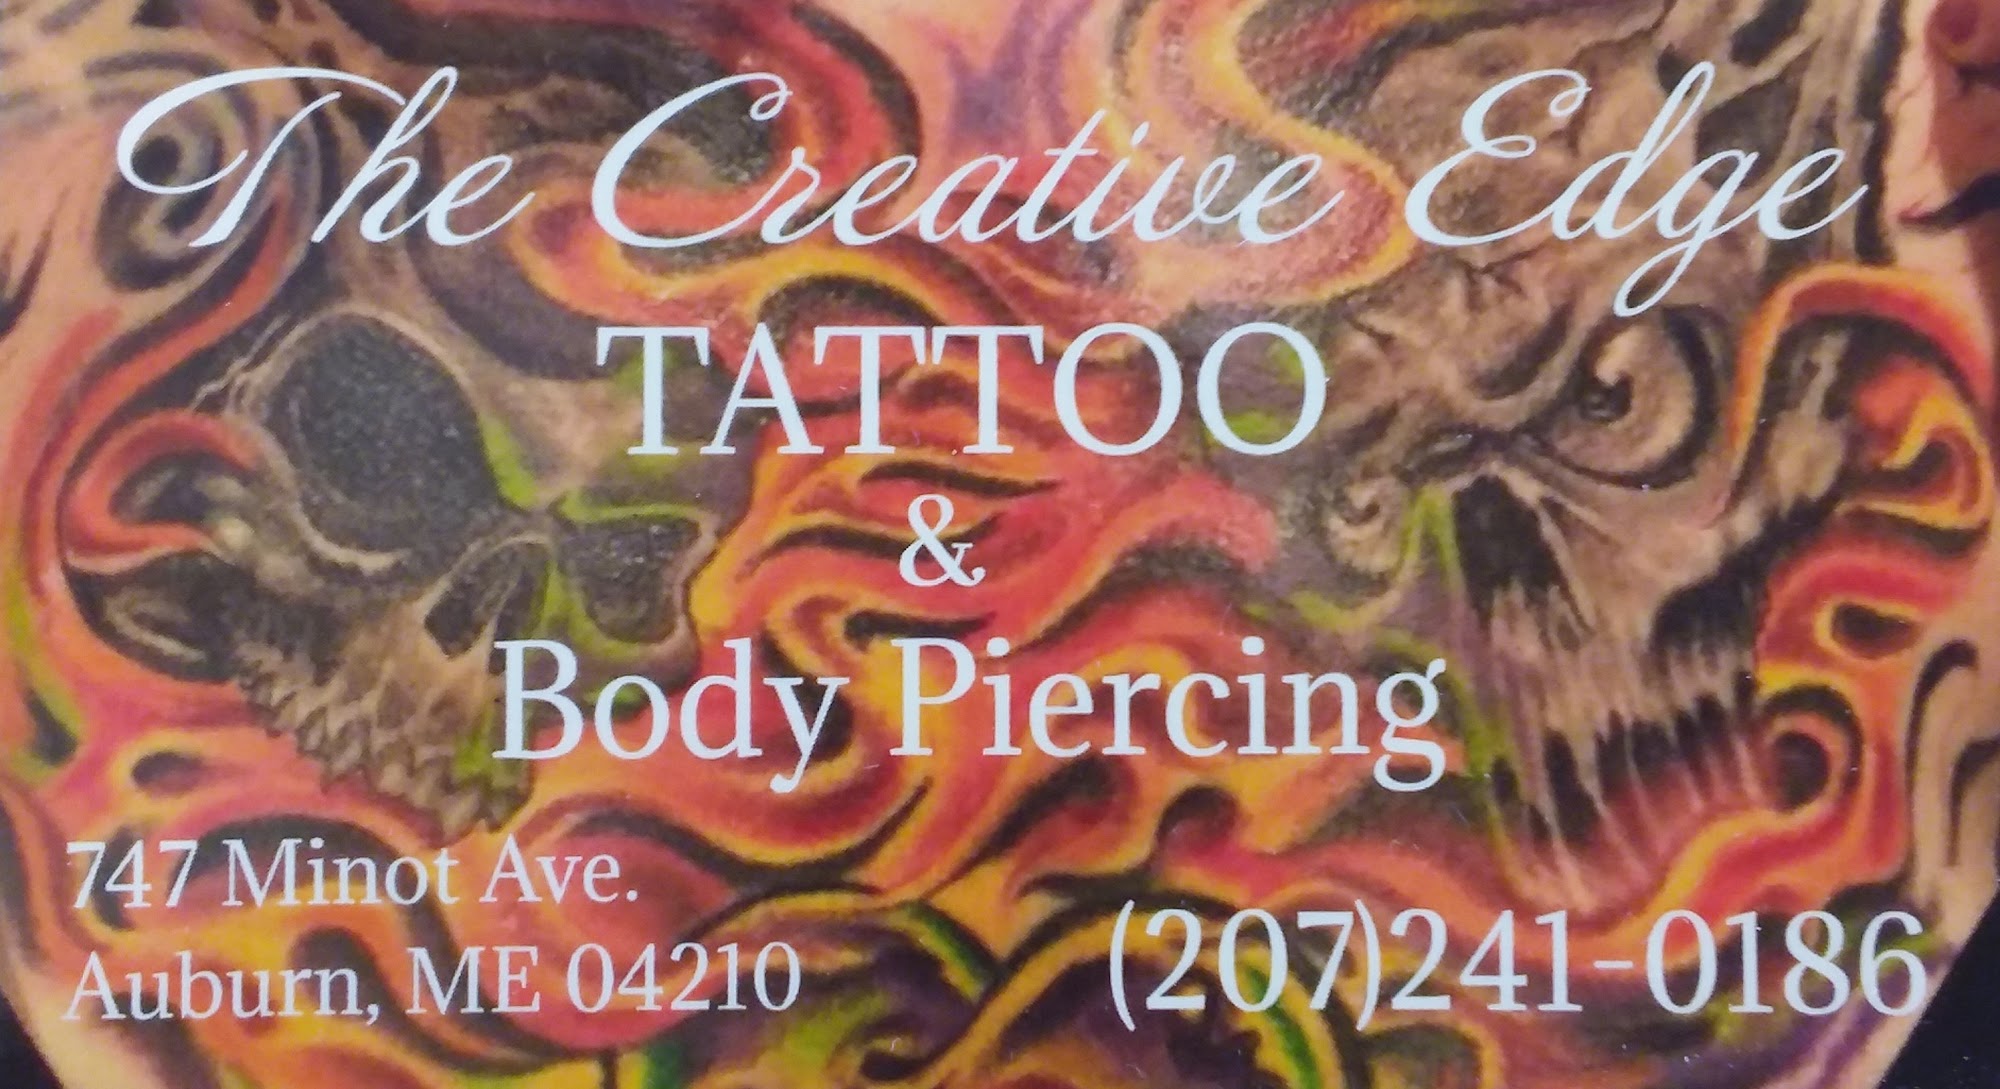 The Creative Edge Tattoo & Body Piercing